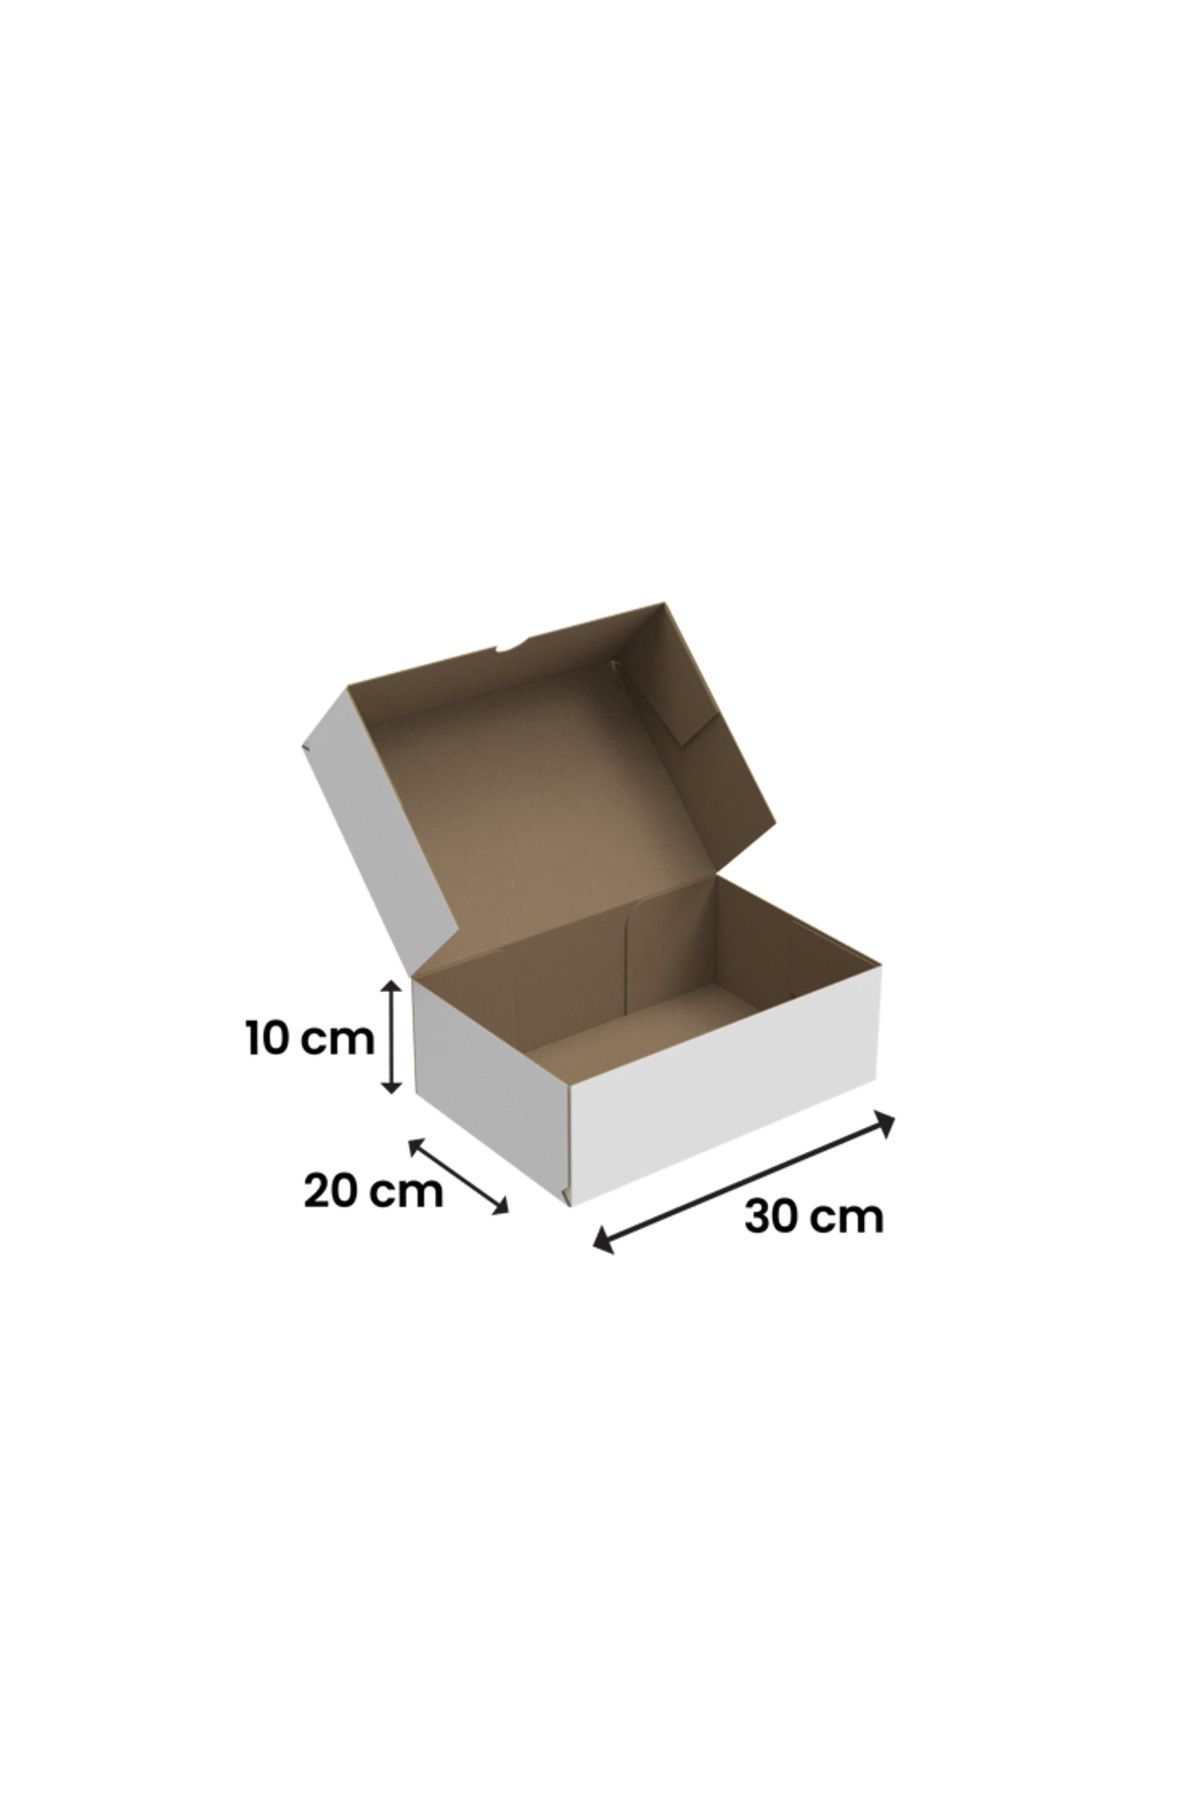 Packanya 30x20x10 - Beyaz Kesimli Karton Kutu - Internet Ve Kargo Kutusu - 200 Adet